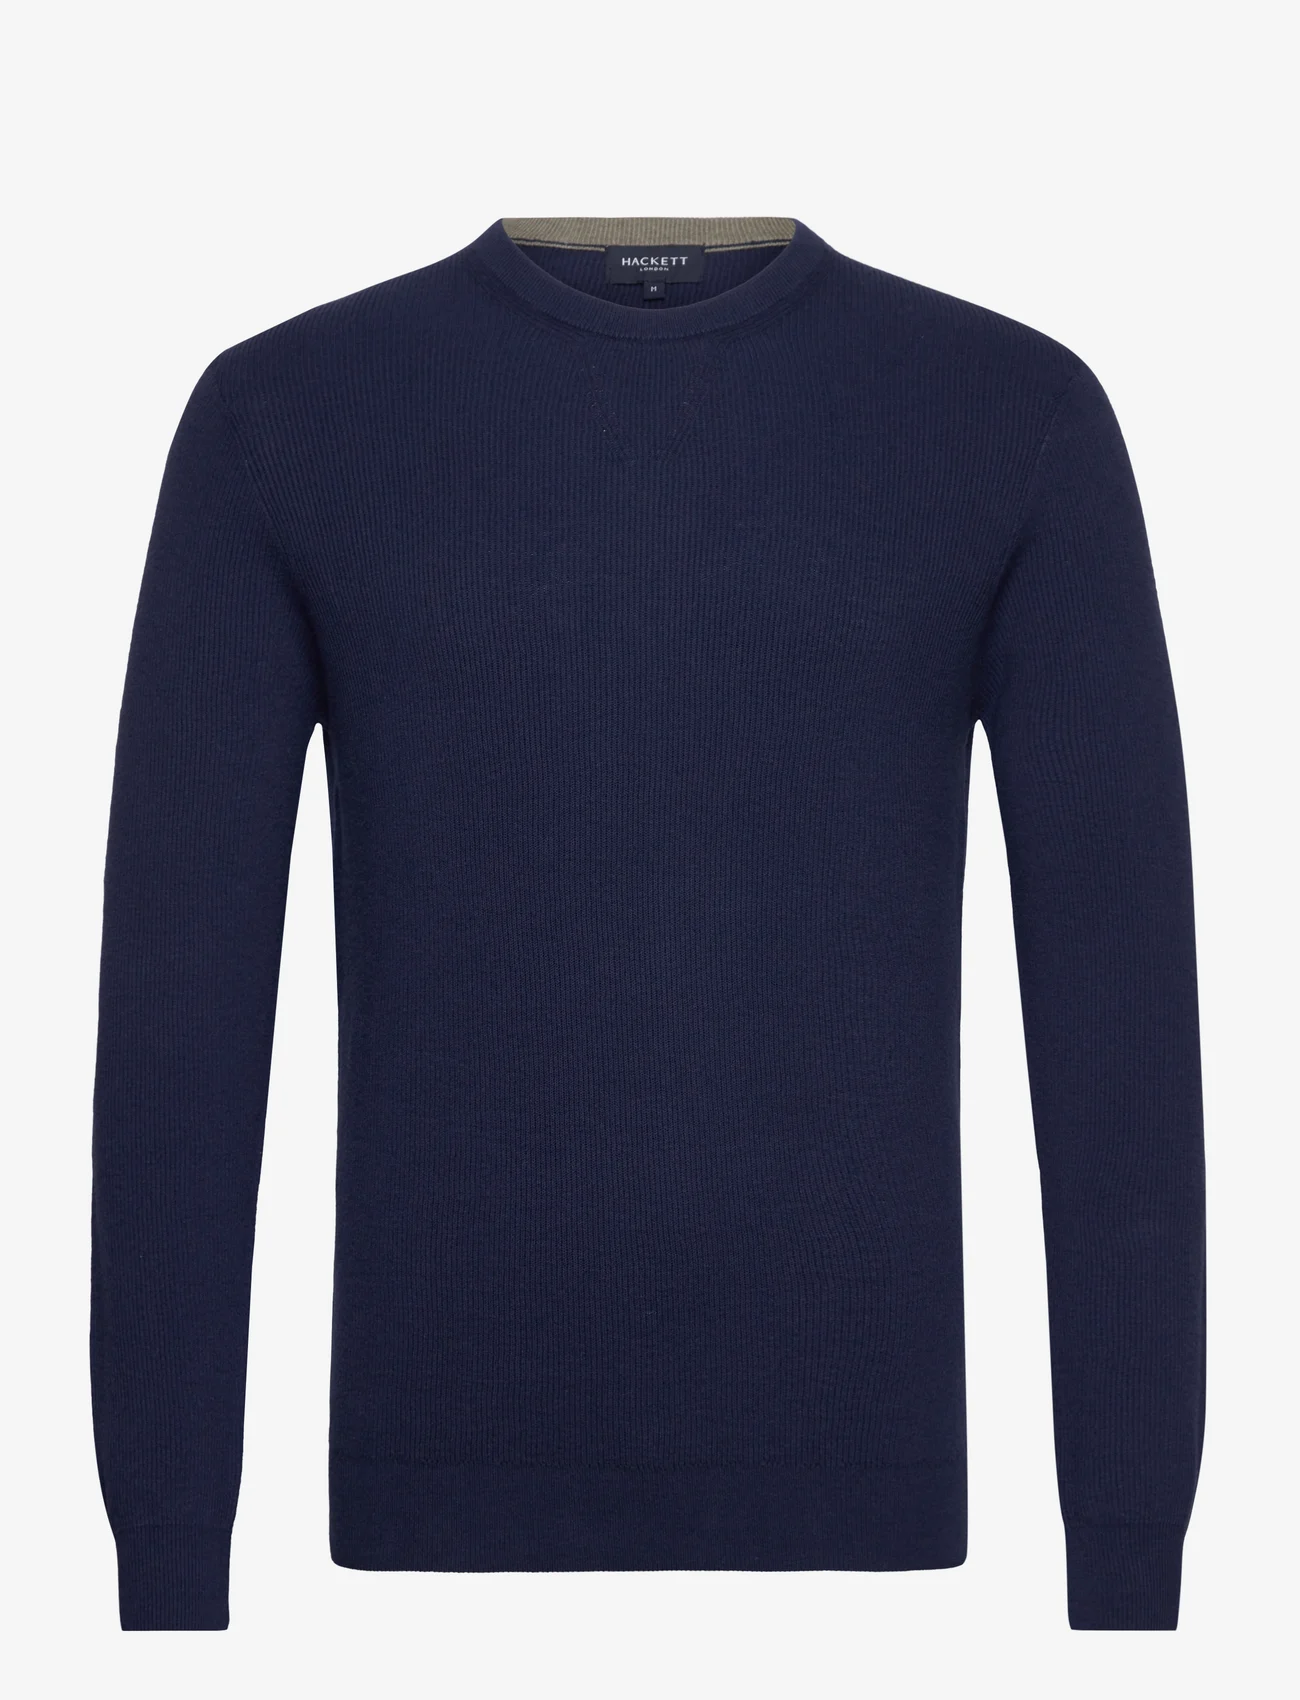 Hackett London - RIB KNIT CREW - knitted round necks - navy blue - 0